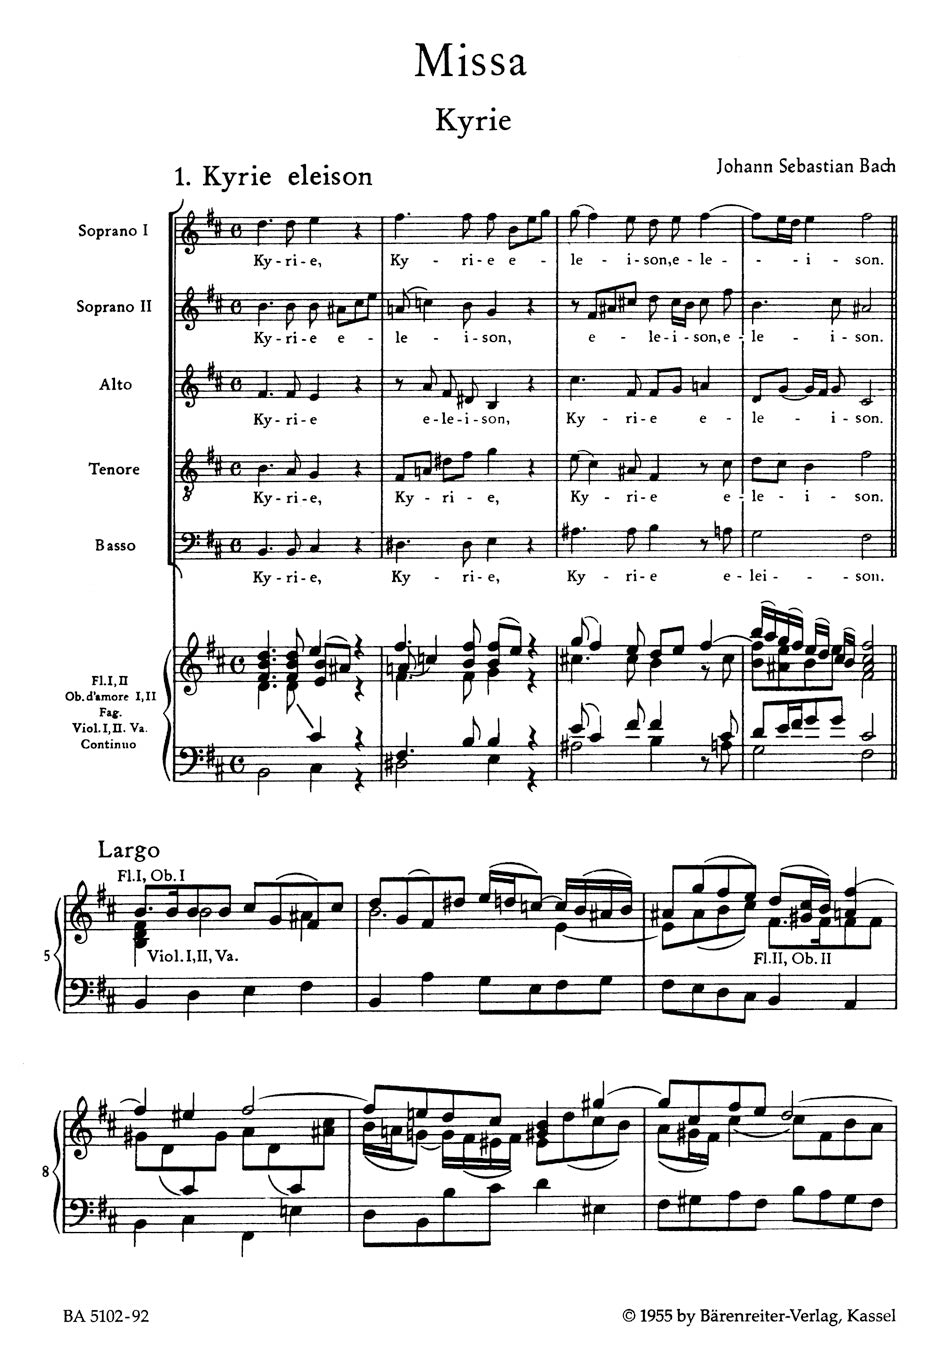 J.S. Bach's Mass in B Minor - TicketDFW